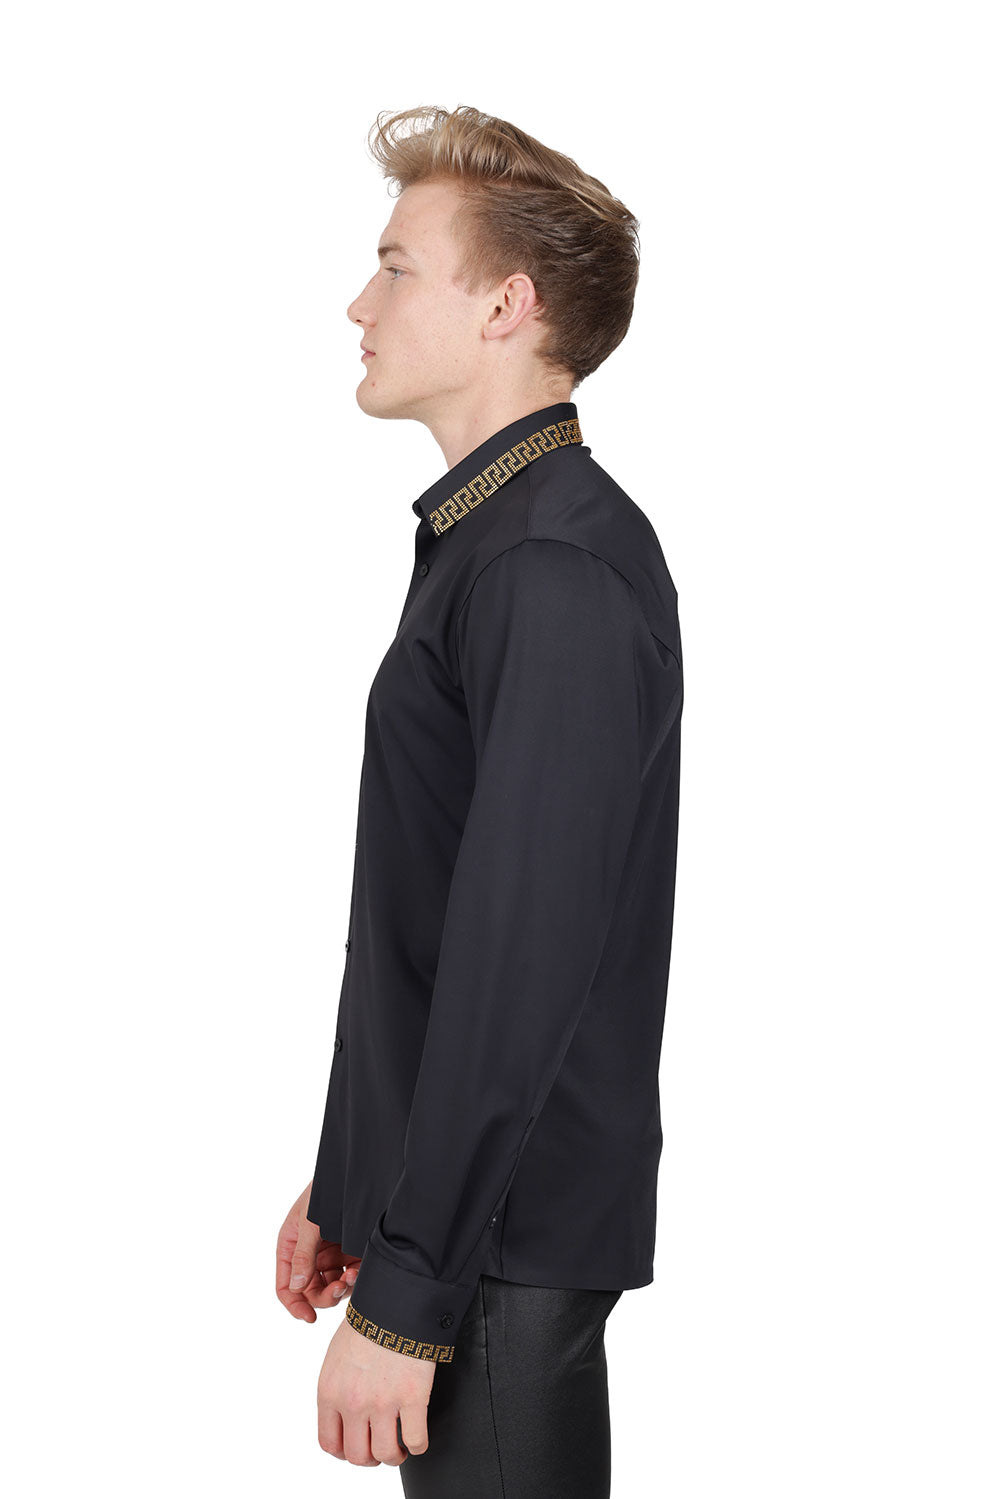 Barabas Men's Greek Key Baroque Button Down Long Sleeves Shirts BR100 Black Gold